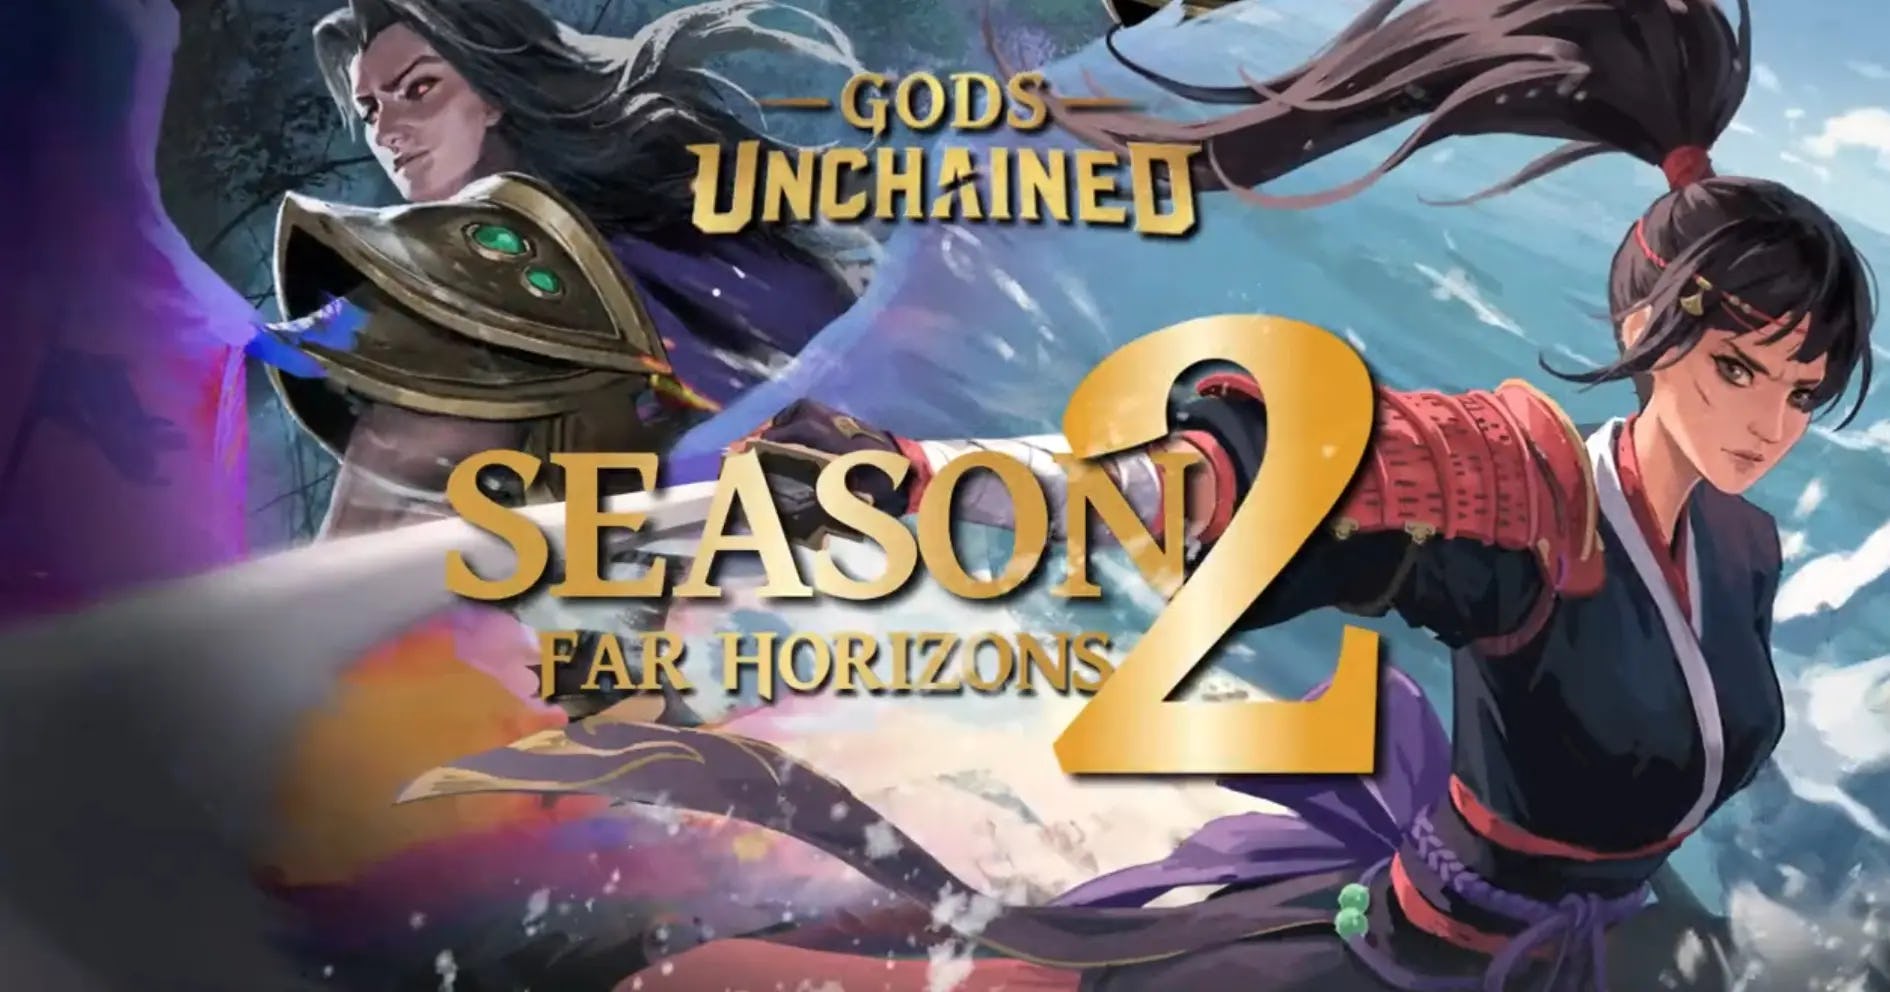 Gods Unchained Reveals More Details on Season 2: Far Horizons 